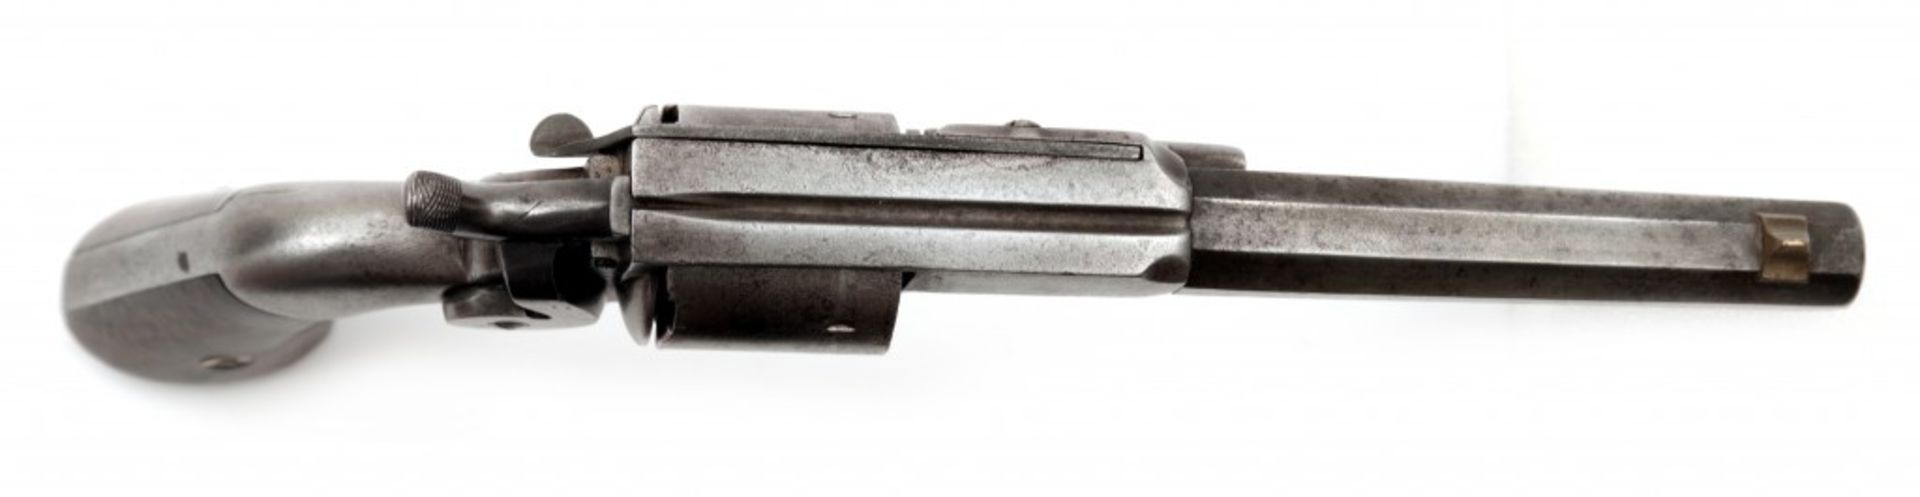 Allen & Wheelock 1st Model Lipfire Side Hammer Revolver - Image 3 of 4